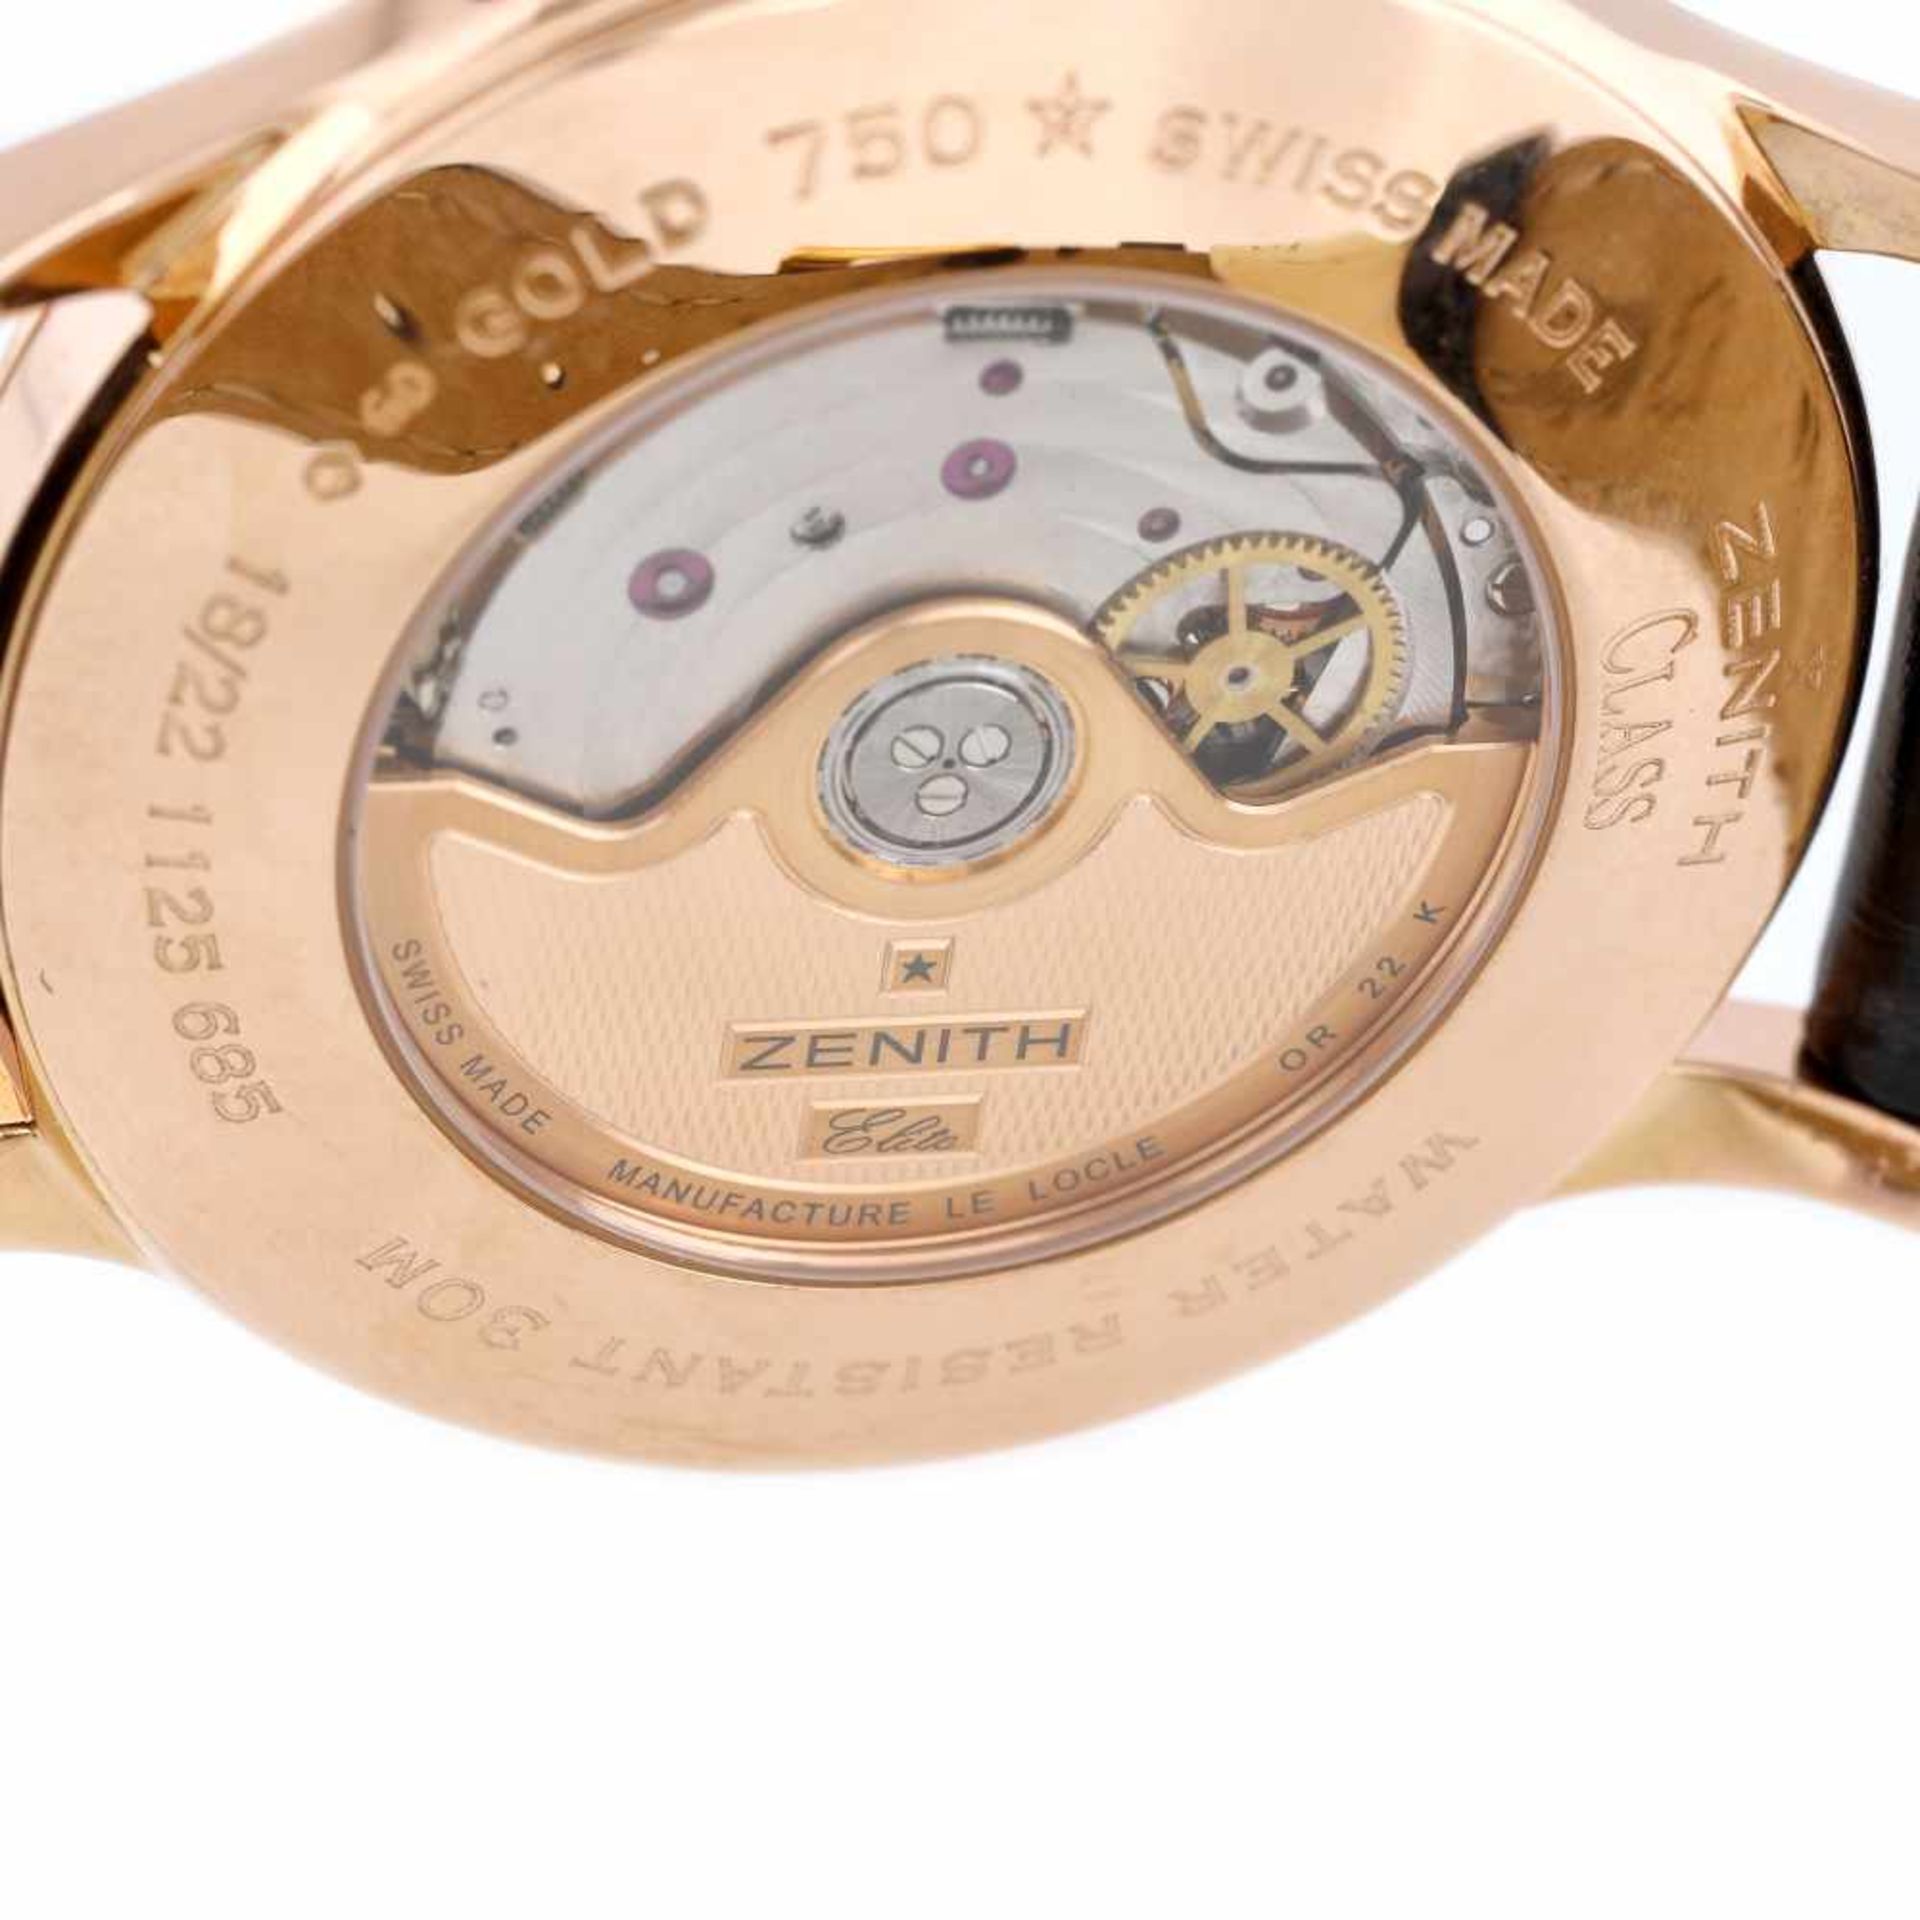 Zenith Class Elite wristwatch, rose gold, men, provenance documents - Image 4 of 4